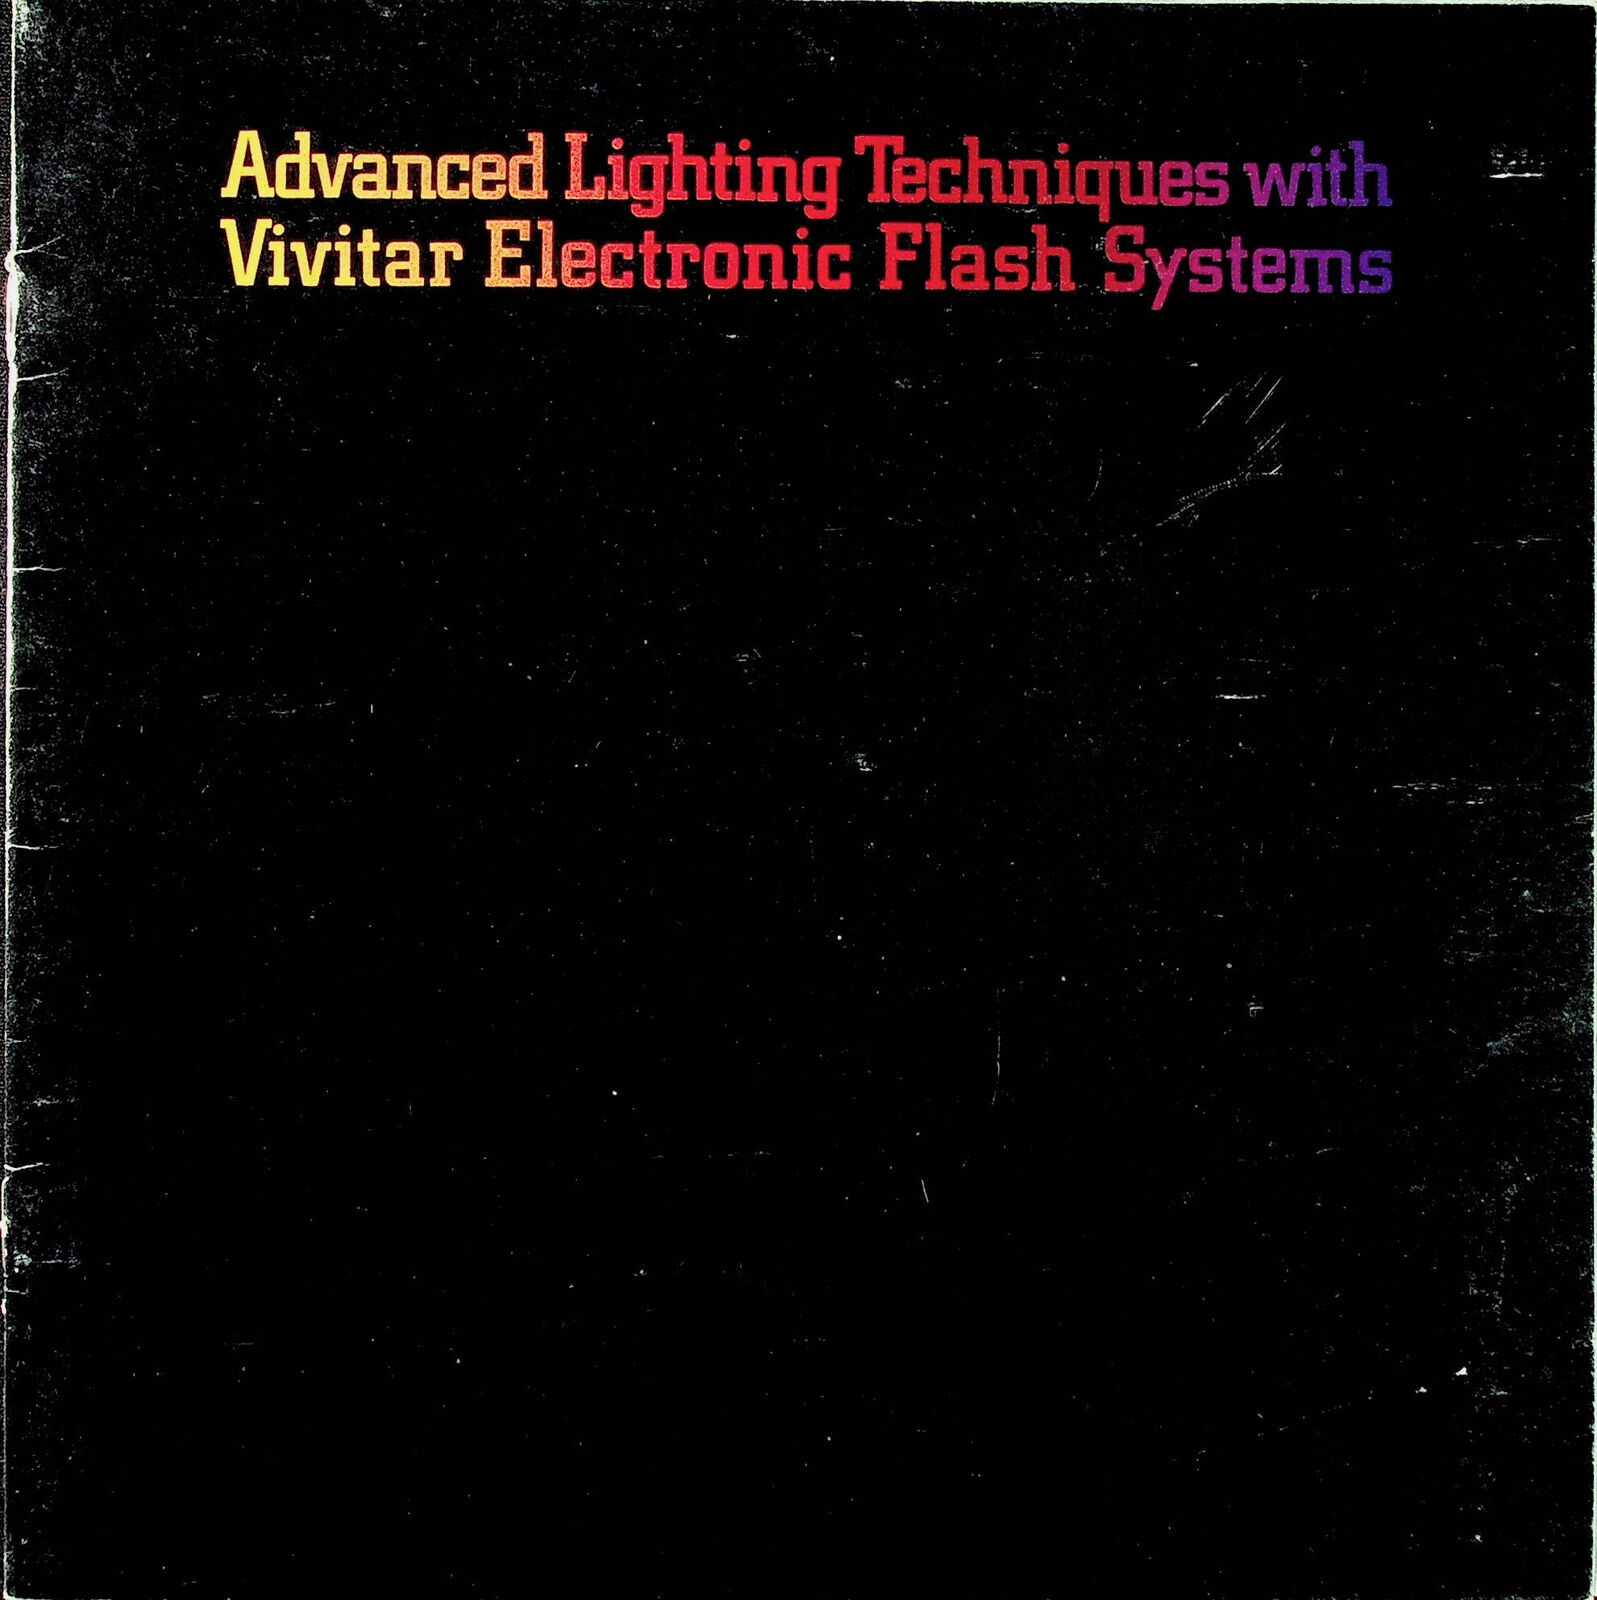 Vivitar Electronic Flash Advanced Lighting Techniques Promotio...